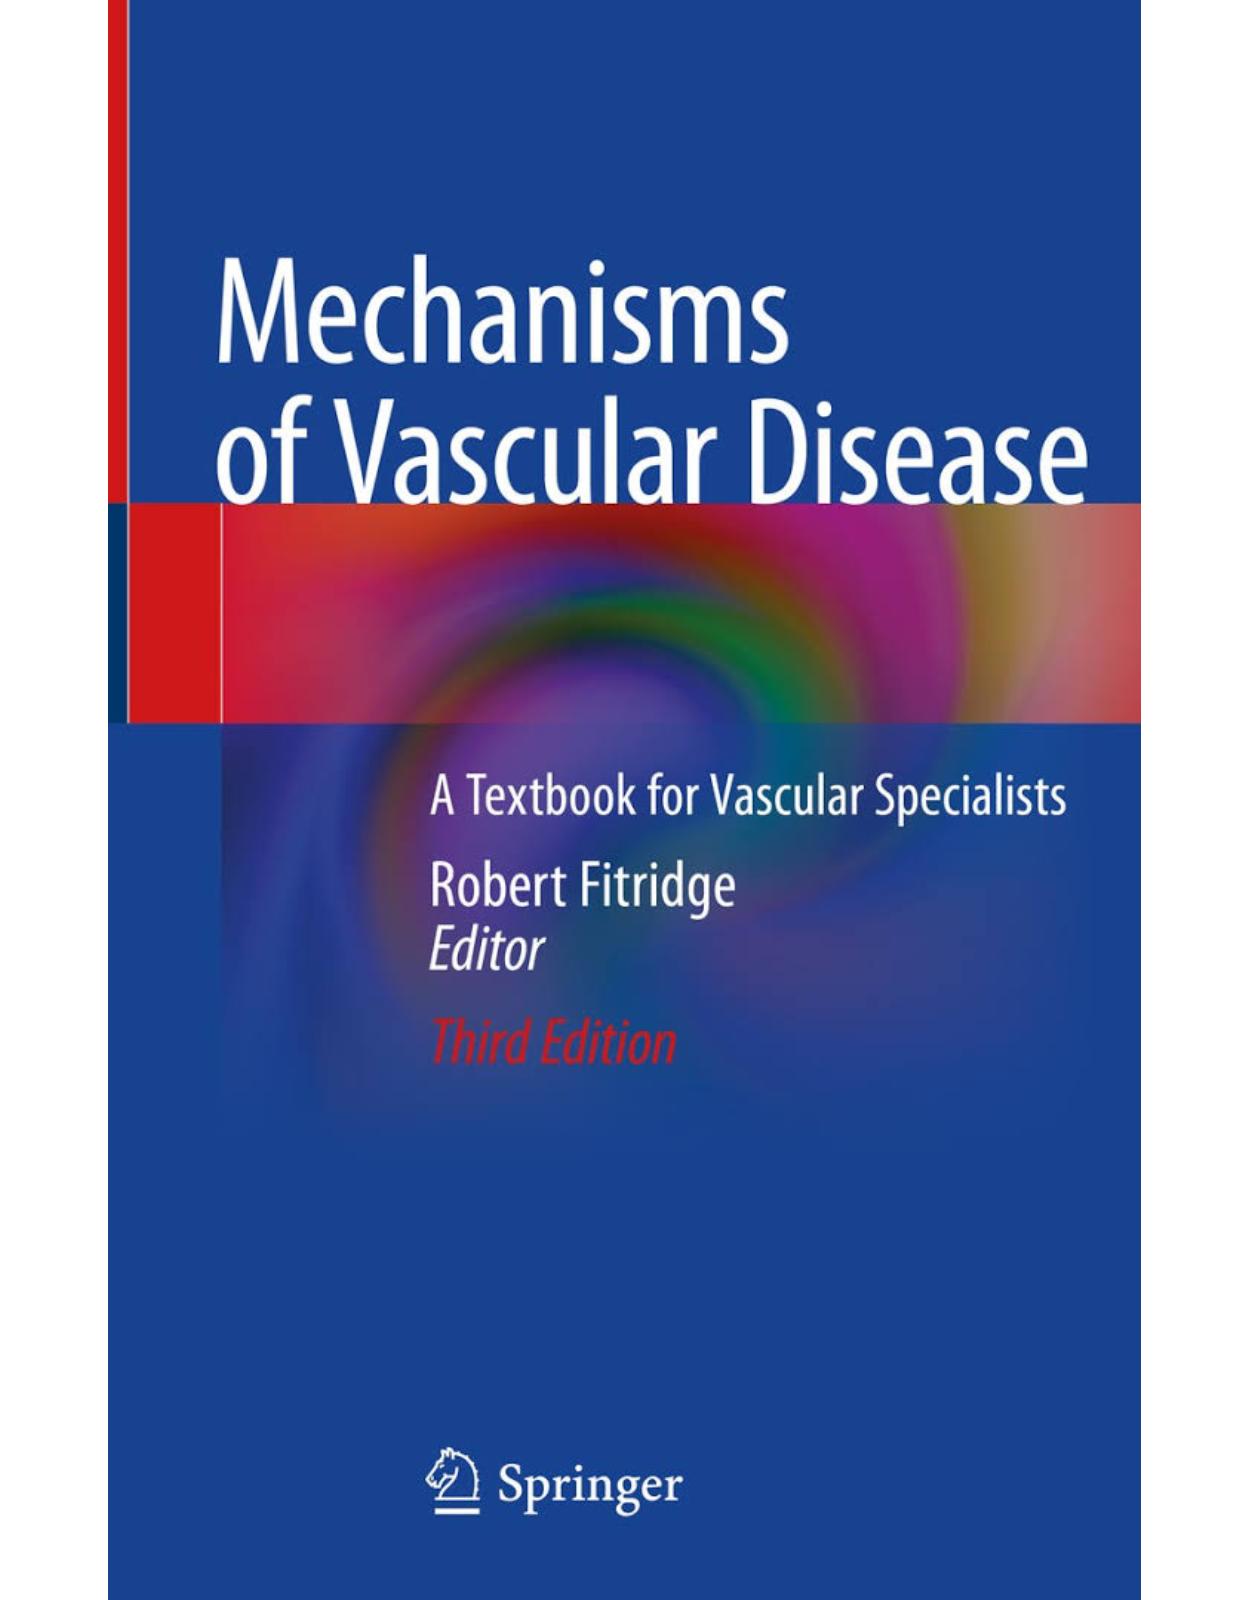 Mechanisms of Vascular Disease: A Textbook for Vascular Specialists